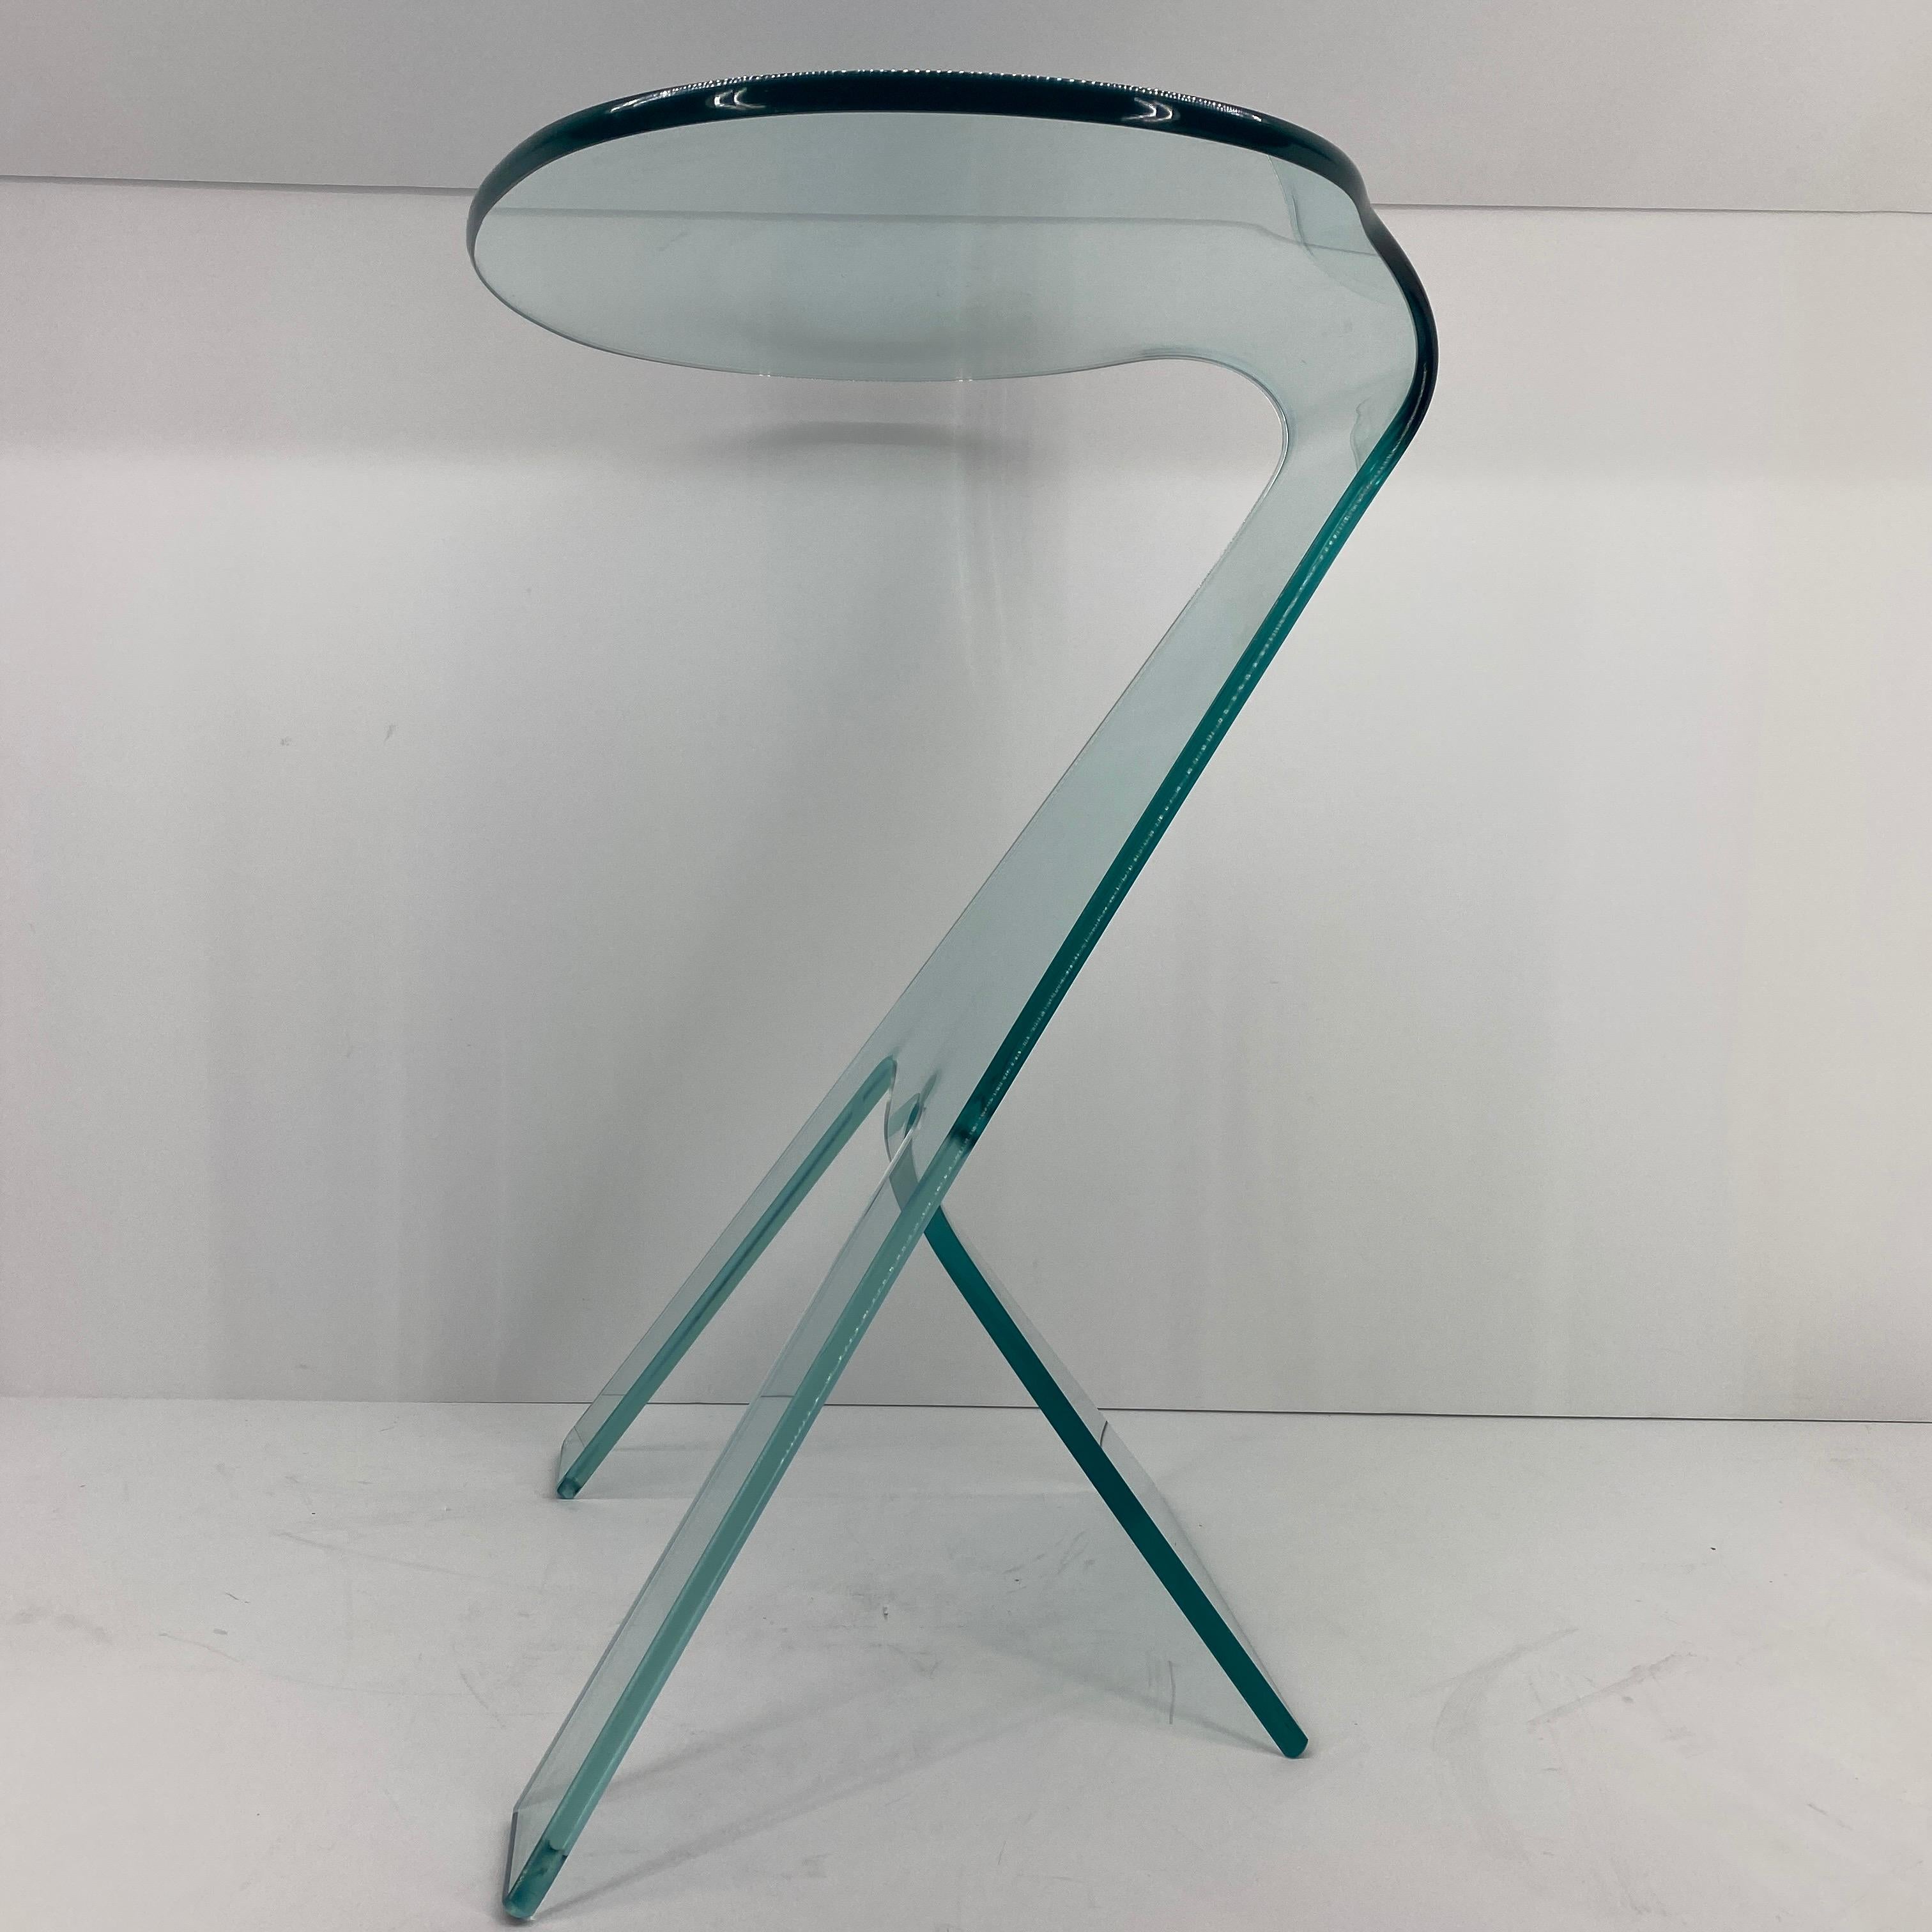 Italian Modern Side Table Designed by Vittorio Livi For FIAM Italy